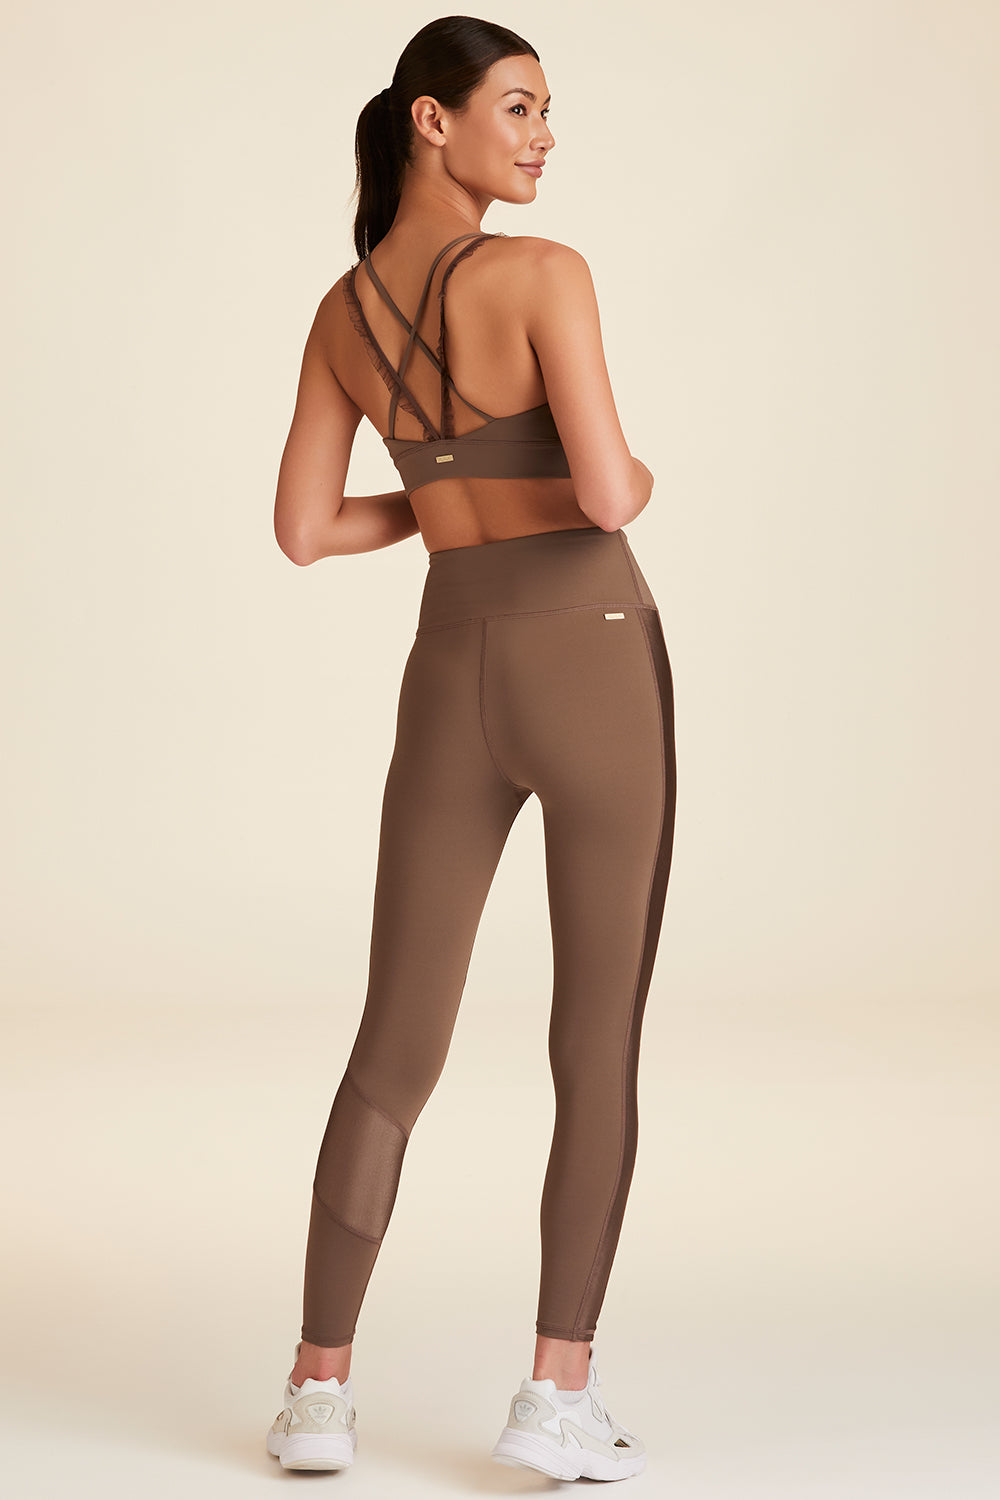 Lululemon Align Full Length Yoga Pants - Ecuador